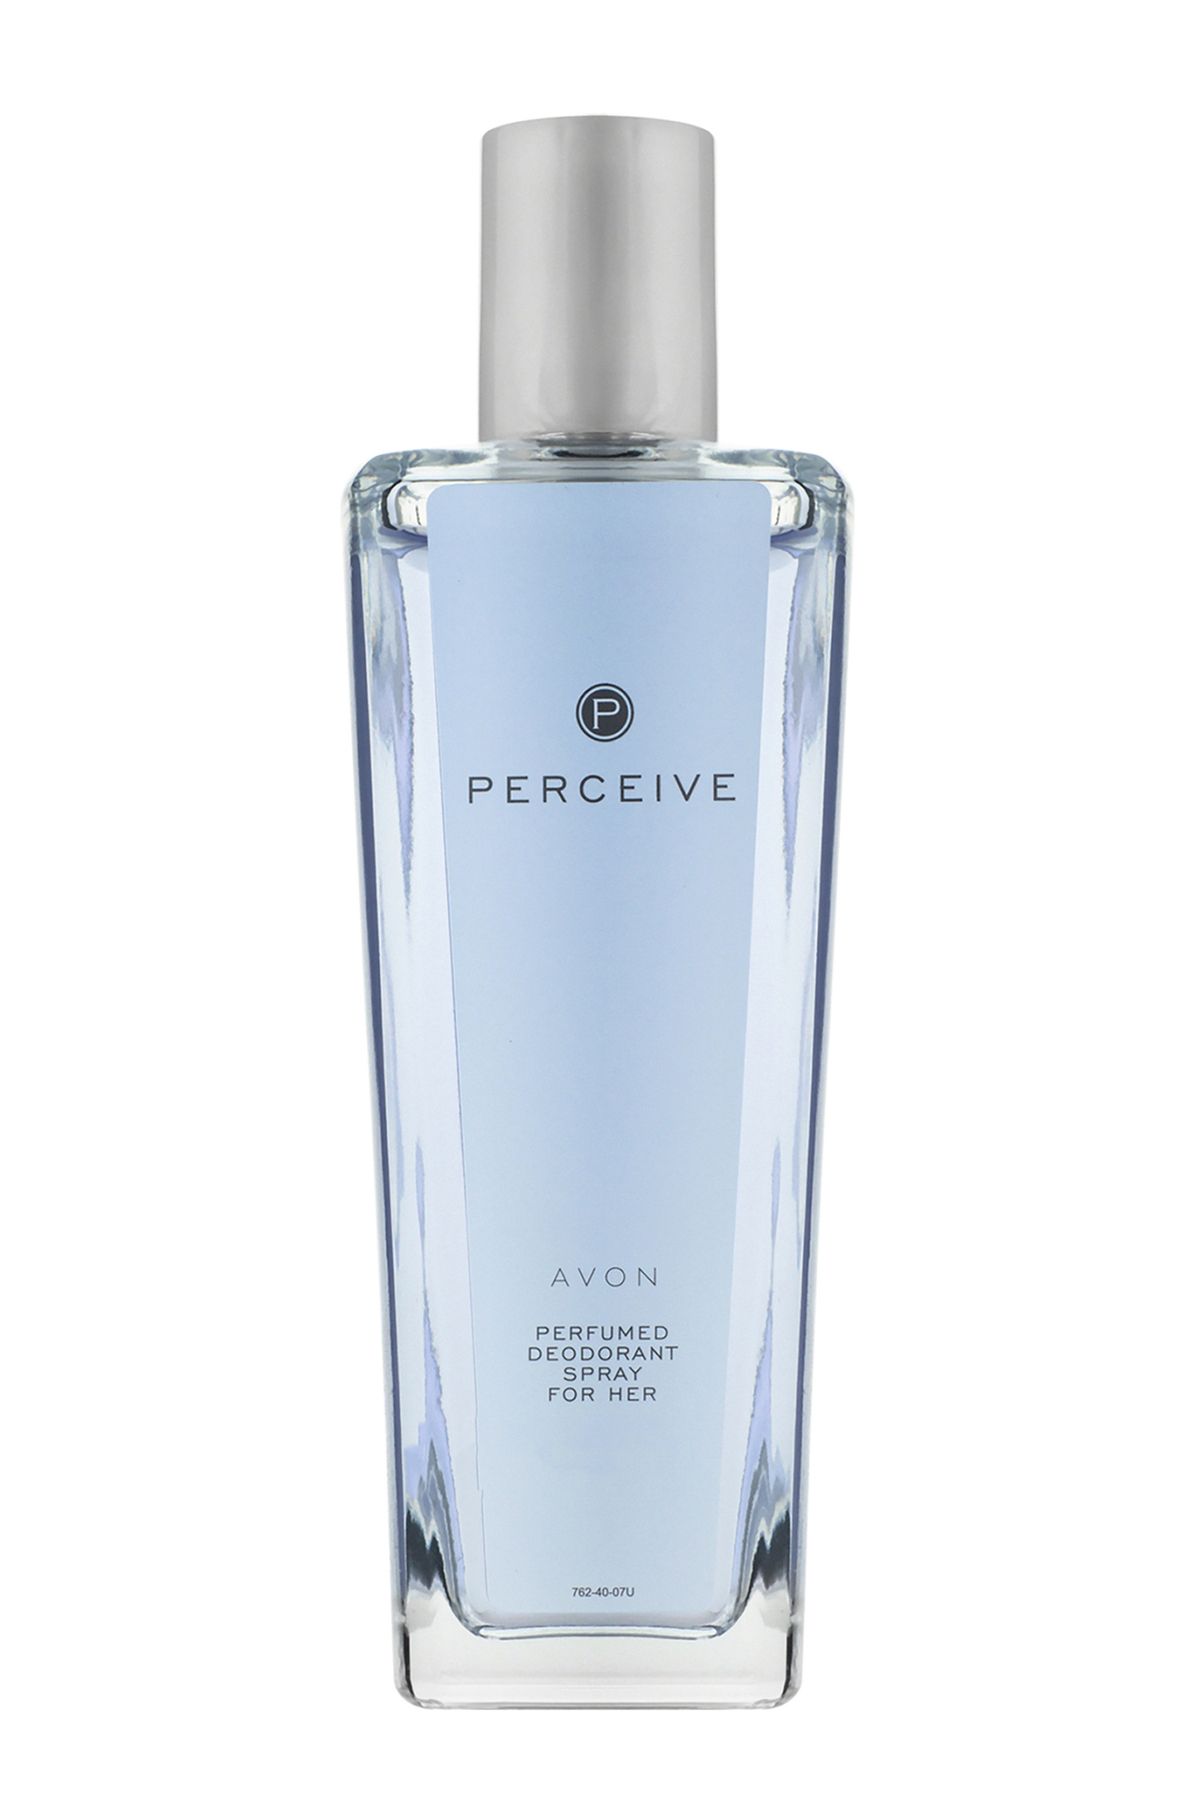 Avon Perceive Parfümlü Deodorant Vücut Spreyi 75 Ml.